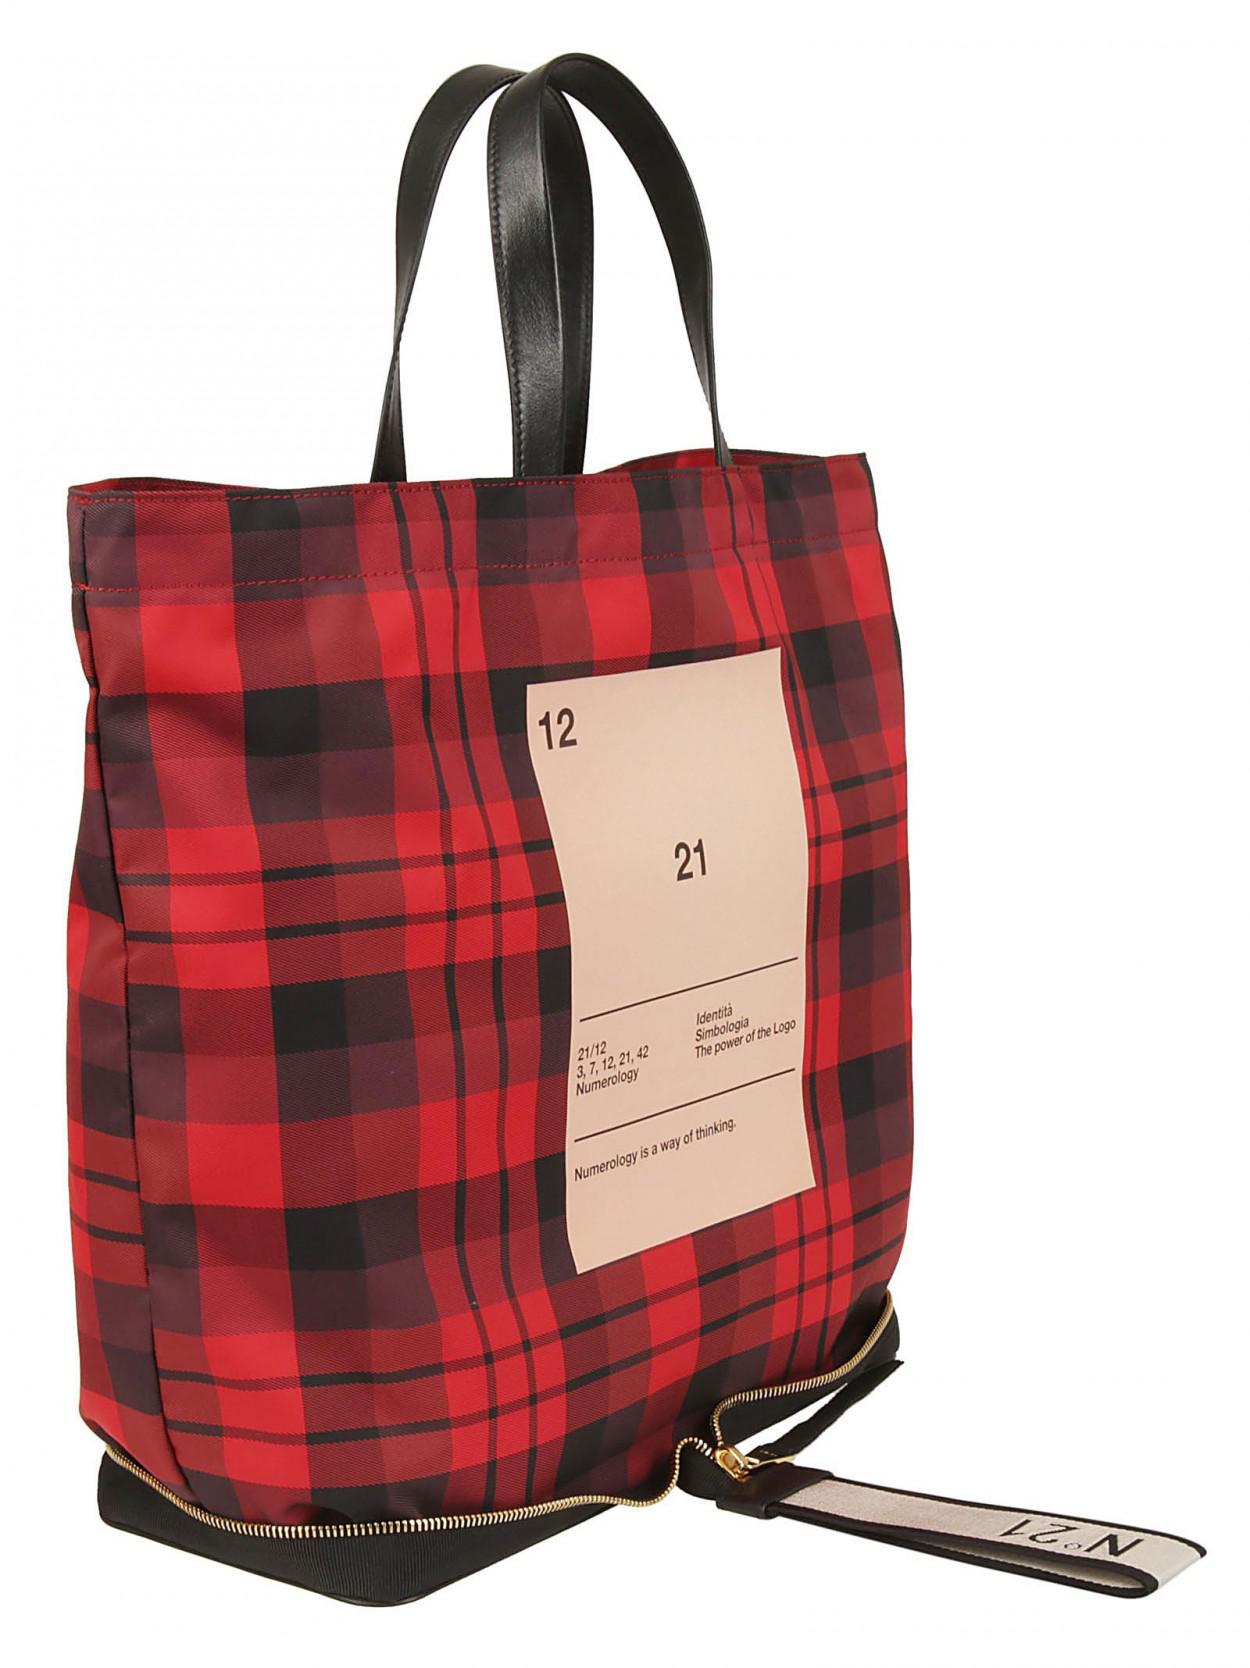 N°21 No21 Printed Tote Bag In Red in Red - Lyst